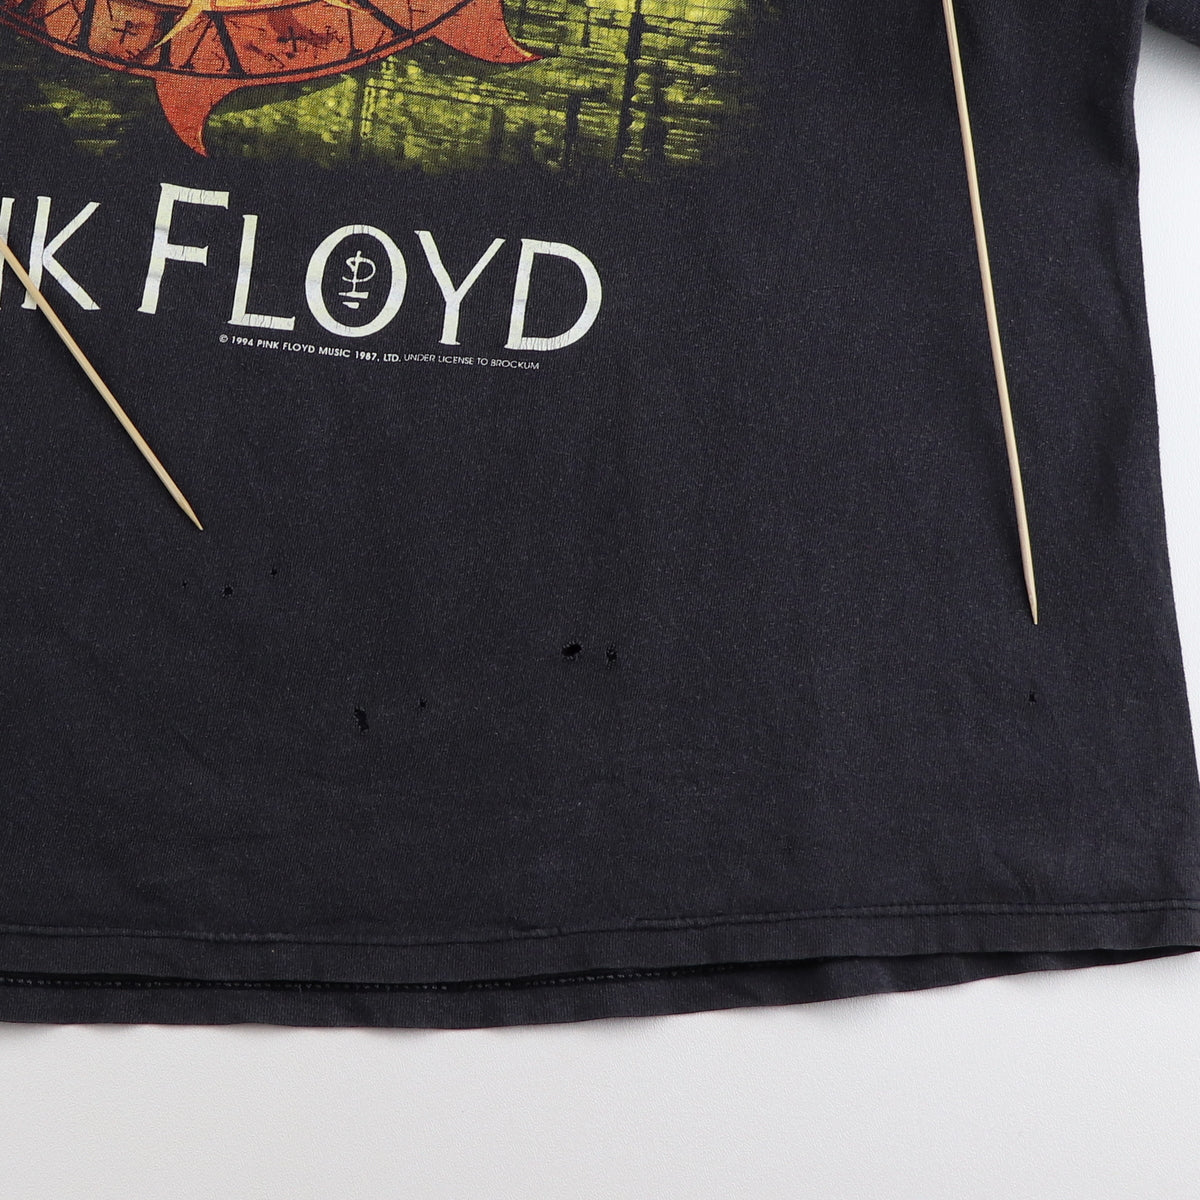 1994 Pink Floyd North American Tour Shirt – WyCo Vintage